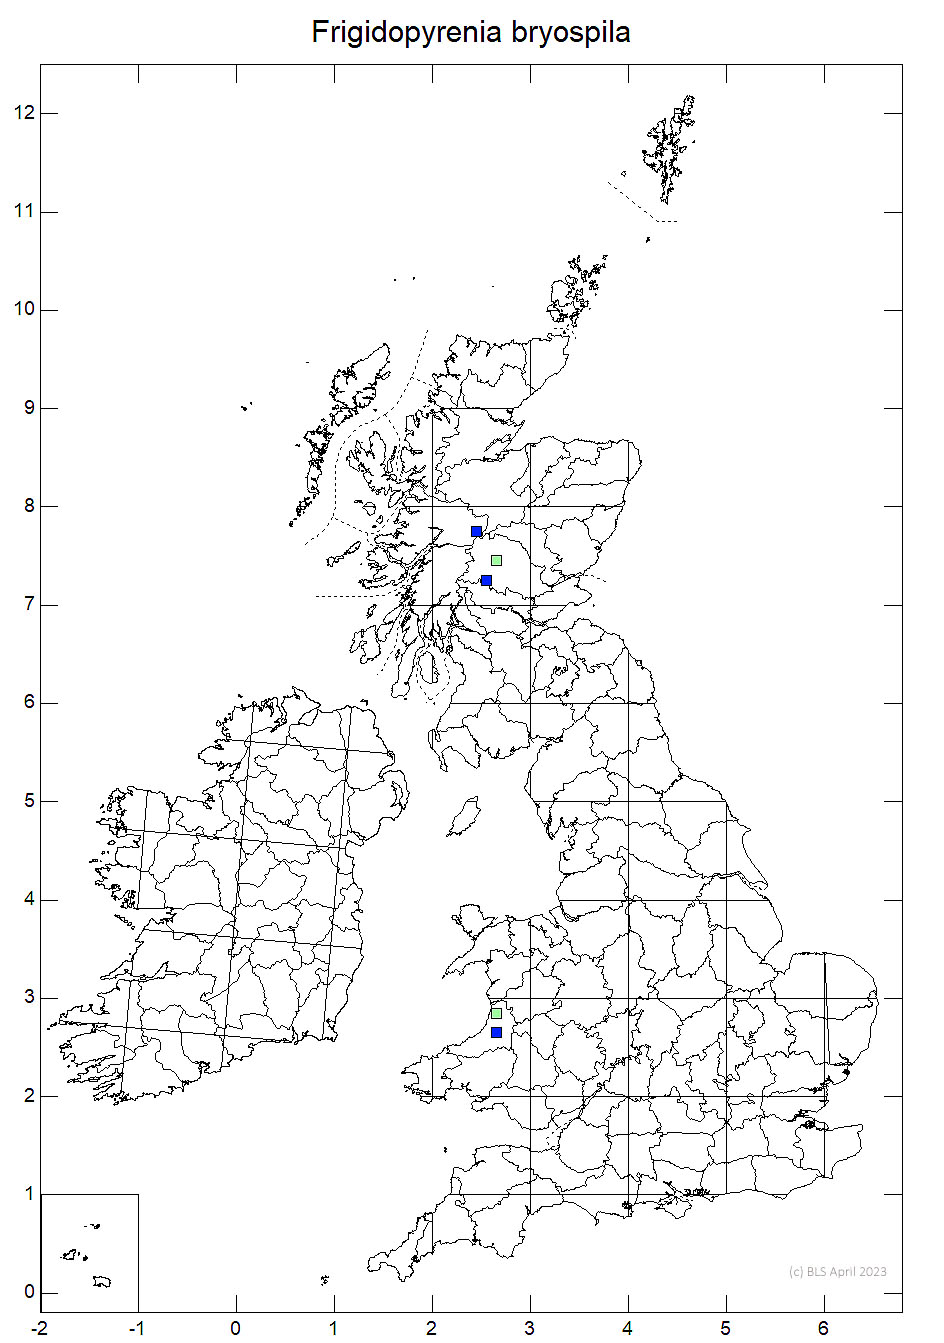 Frigidopyrenia bryospila 10km sq distribution map